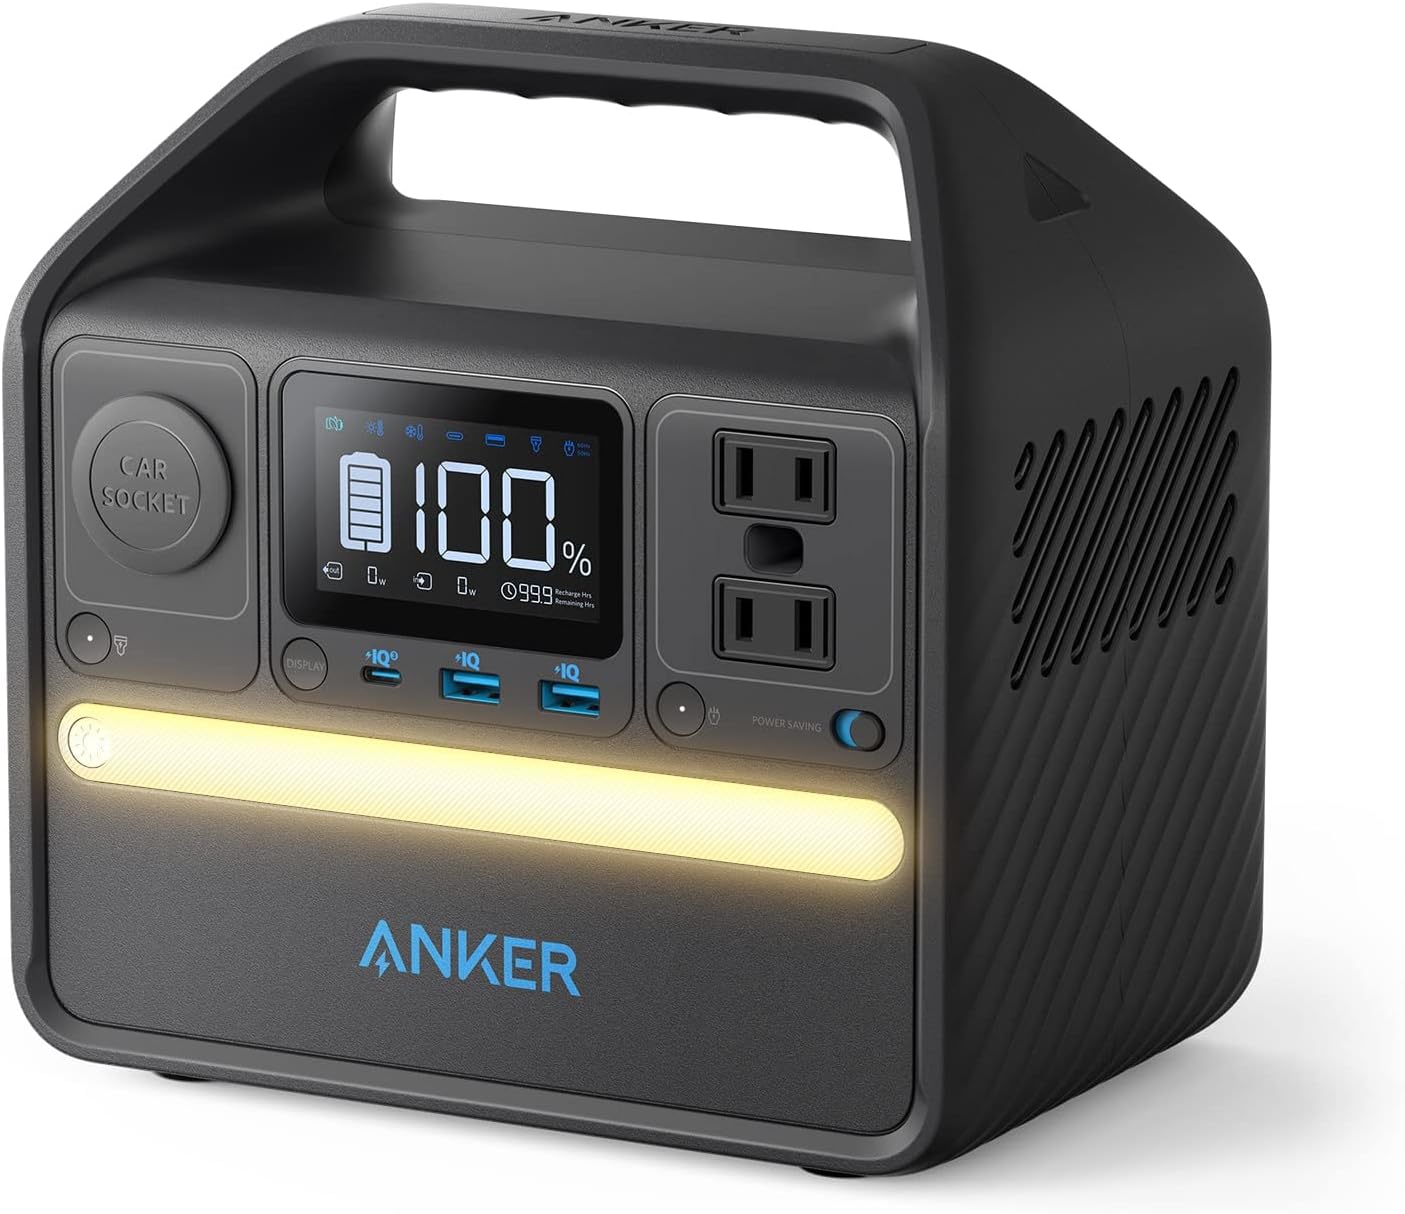 Anker 521 Portable Power Station $169.99